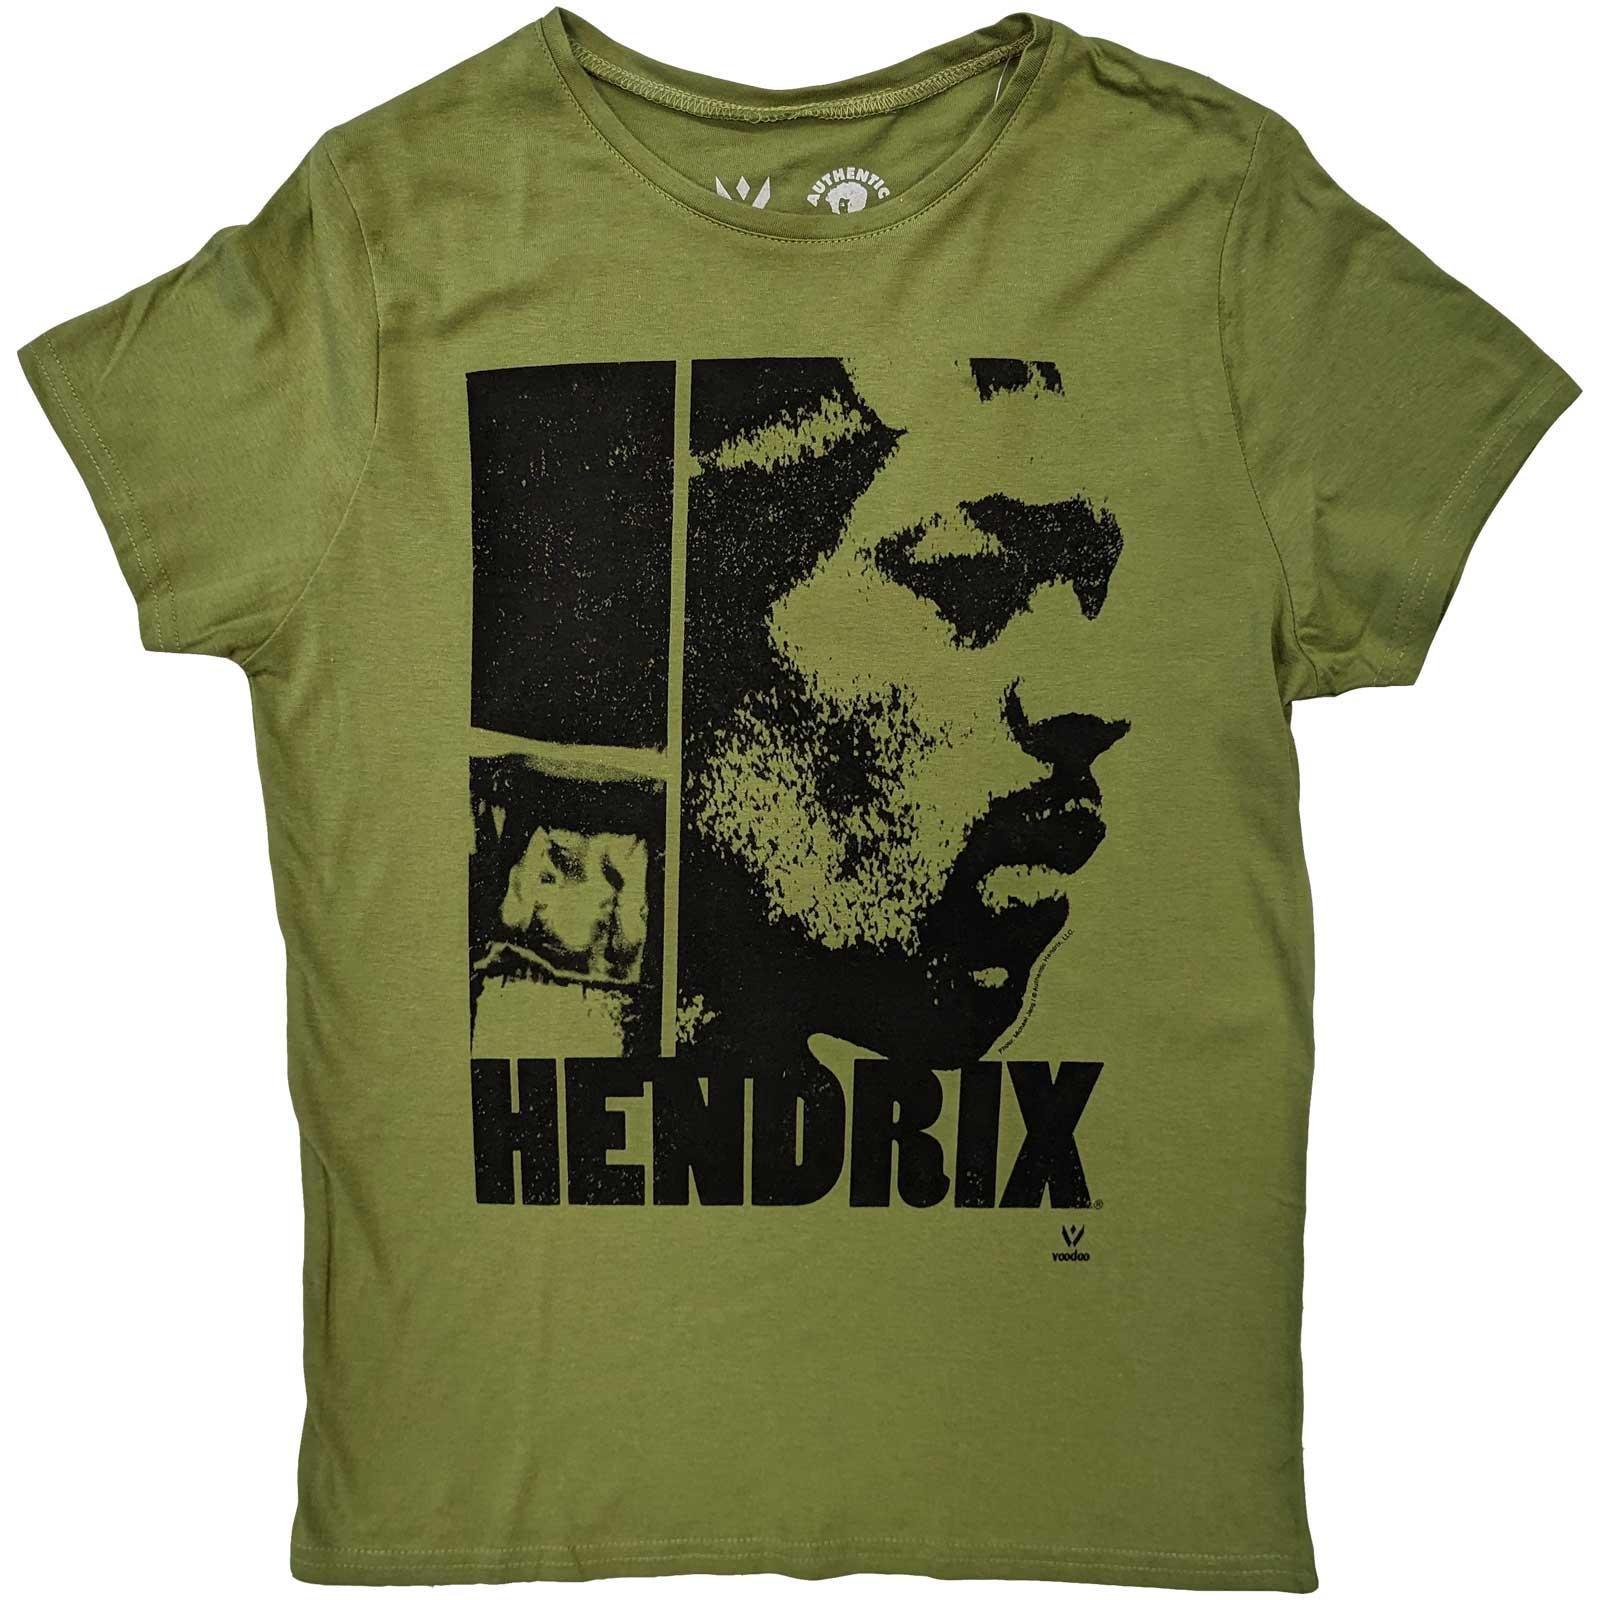 Let Me Live Tshirt Damen Grün XL von Jimi Hendrix